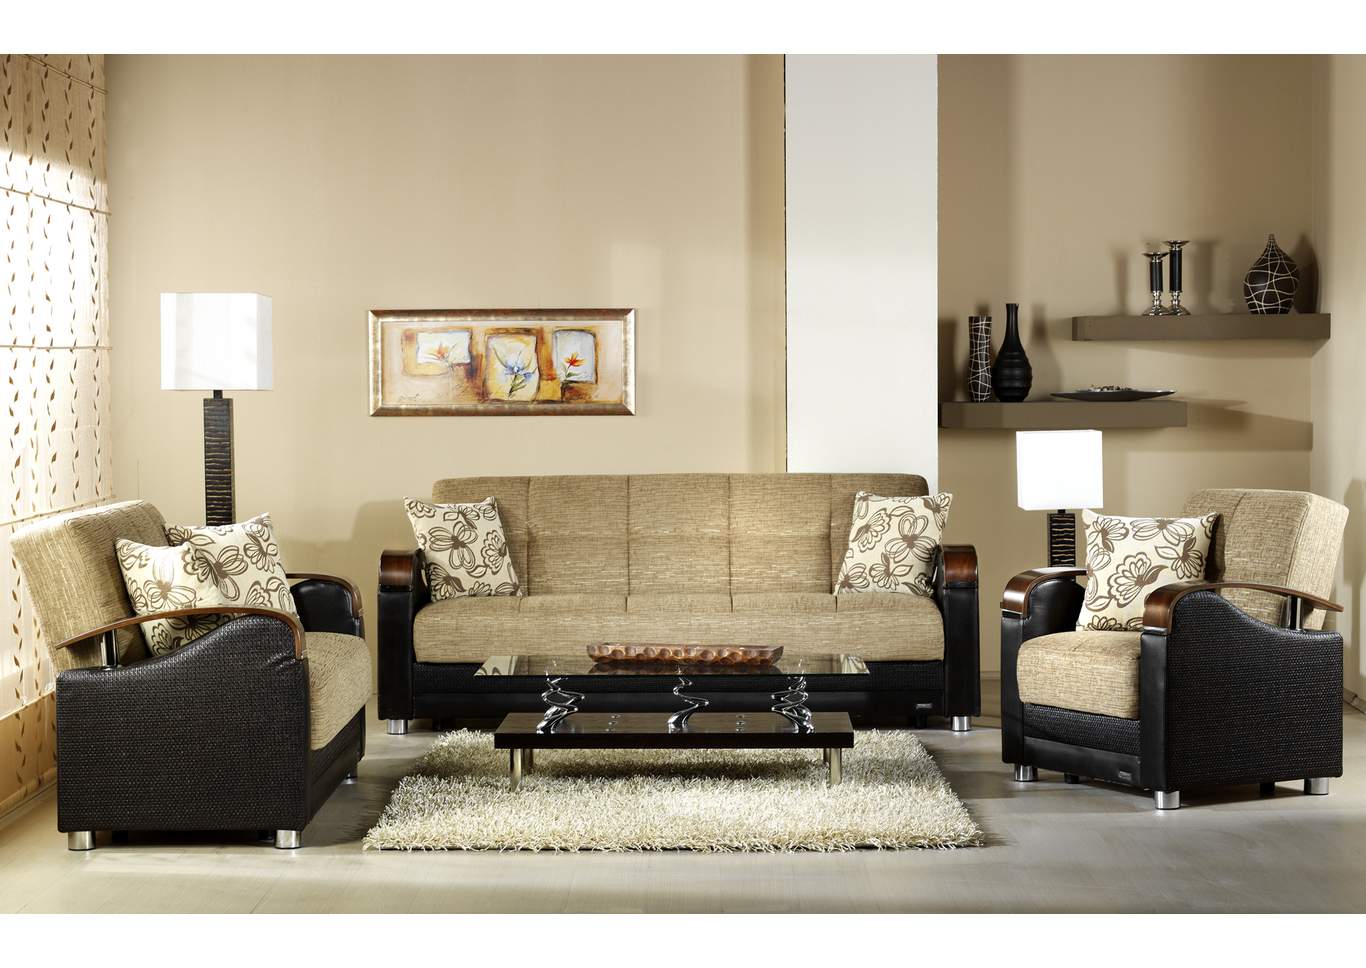 Luna Kose Takimi 3 Piece Sofa Set,Hudson Furniture & Bedding